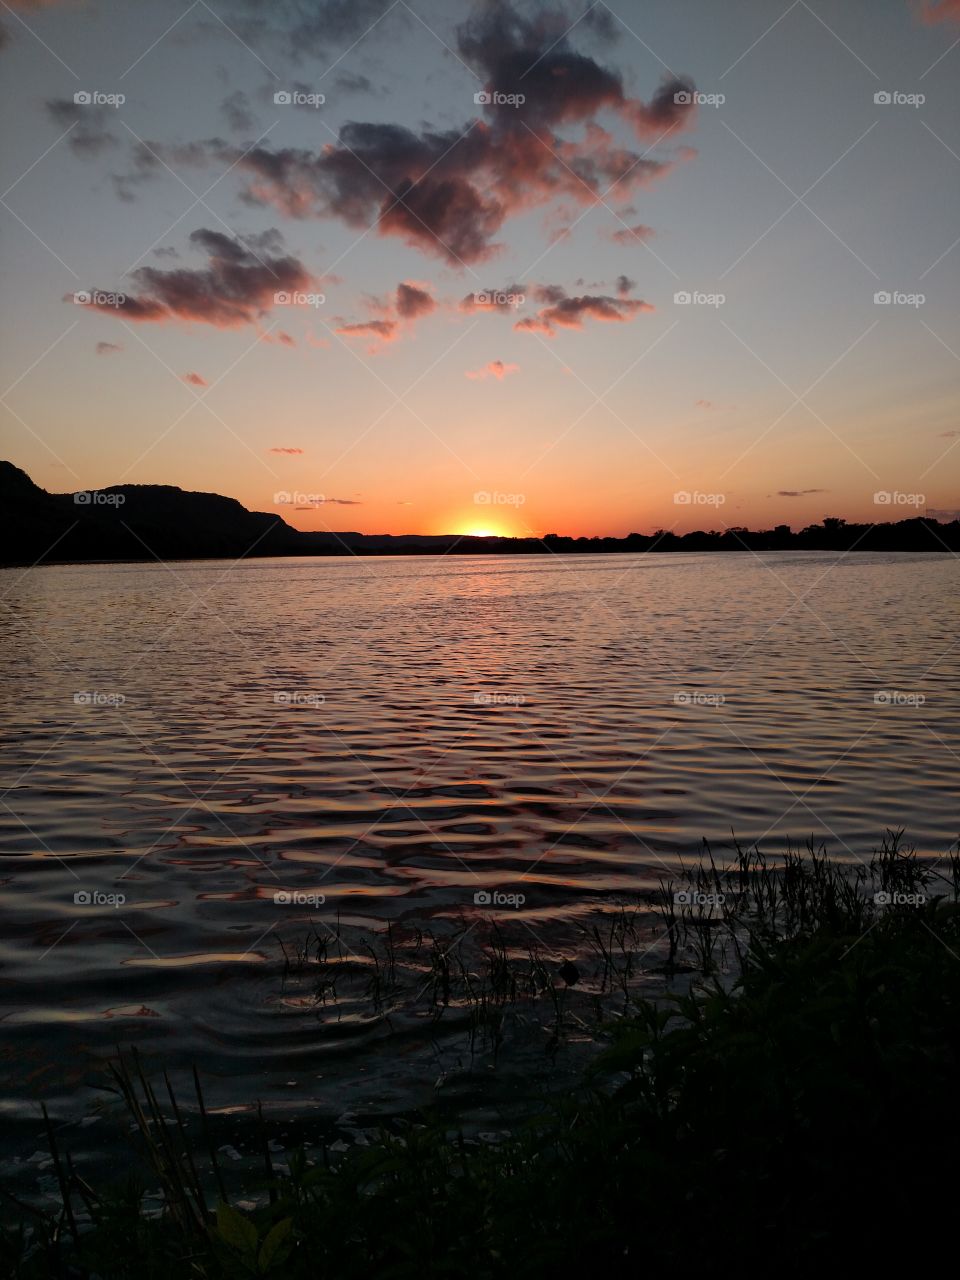 lakeside sunsets